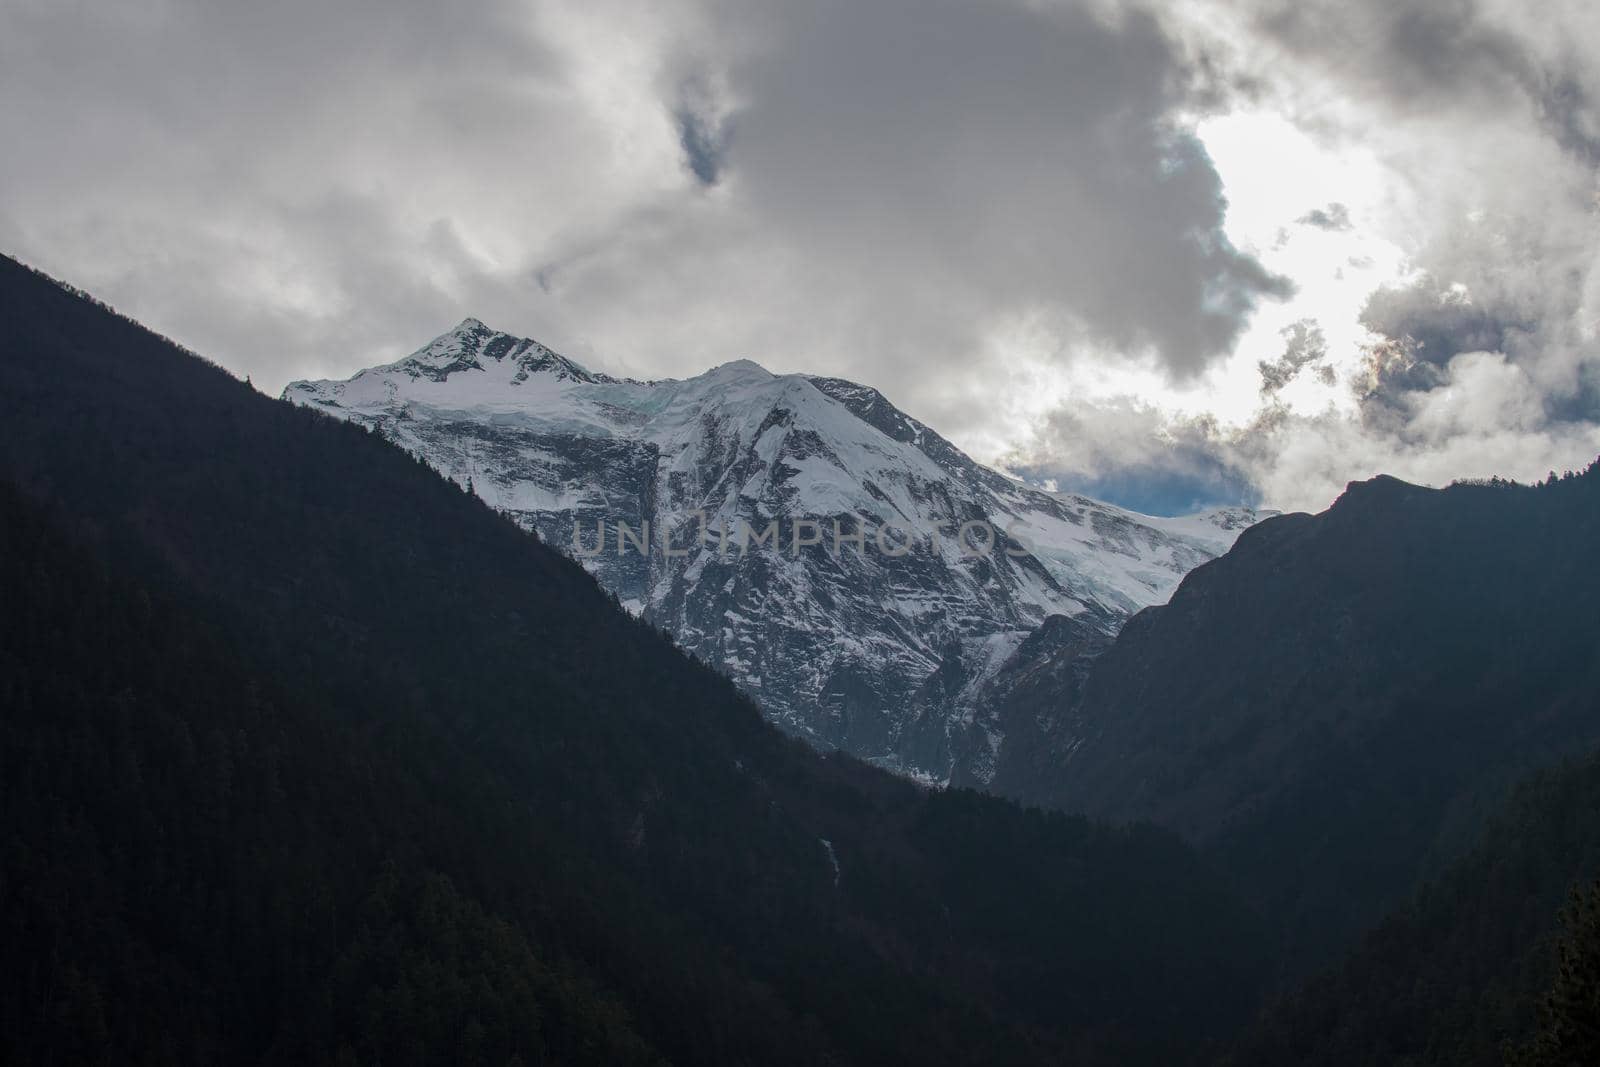 Snow-covered peak trekking Annapurna circuit, Himalaya, Nepal, Asia